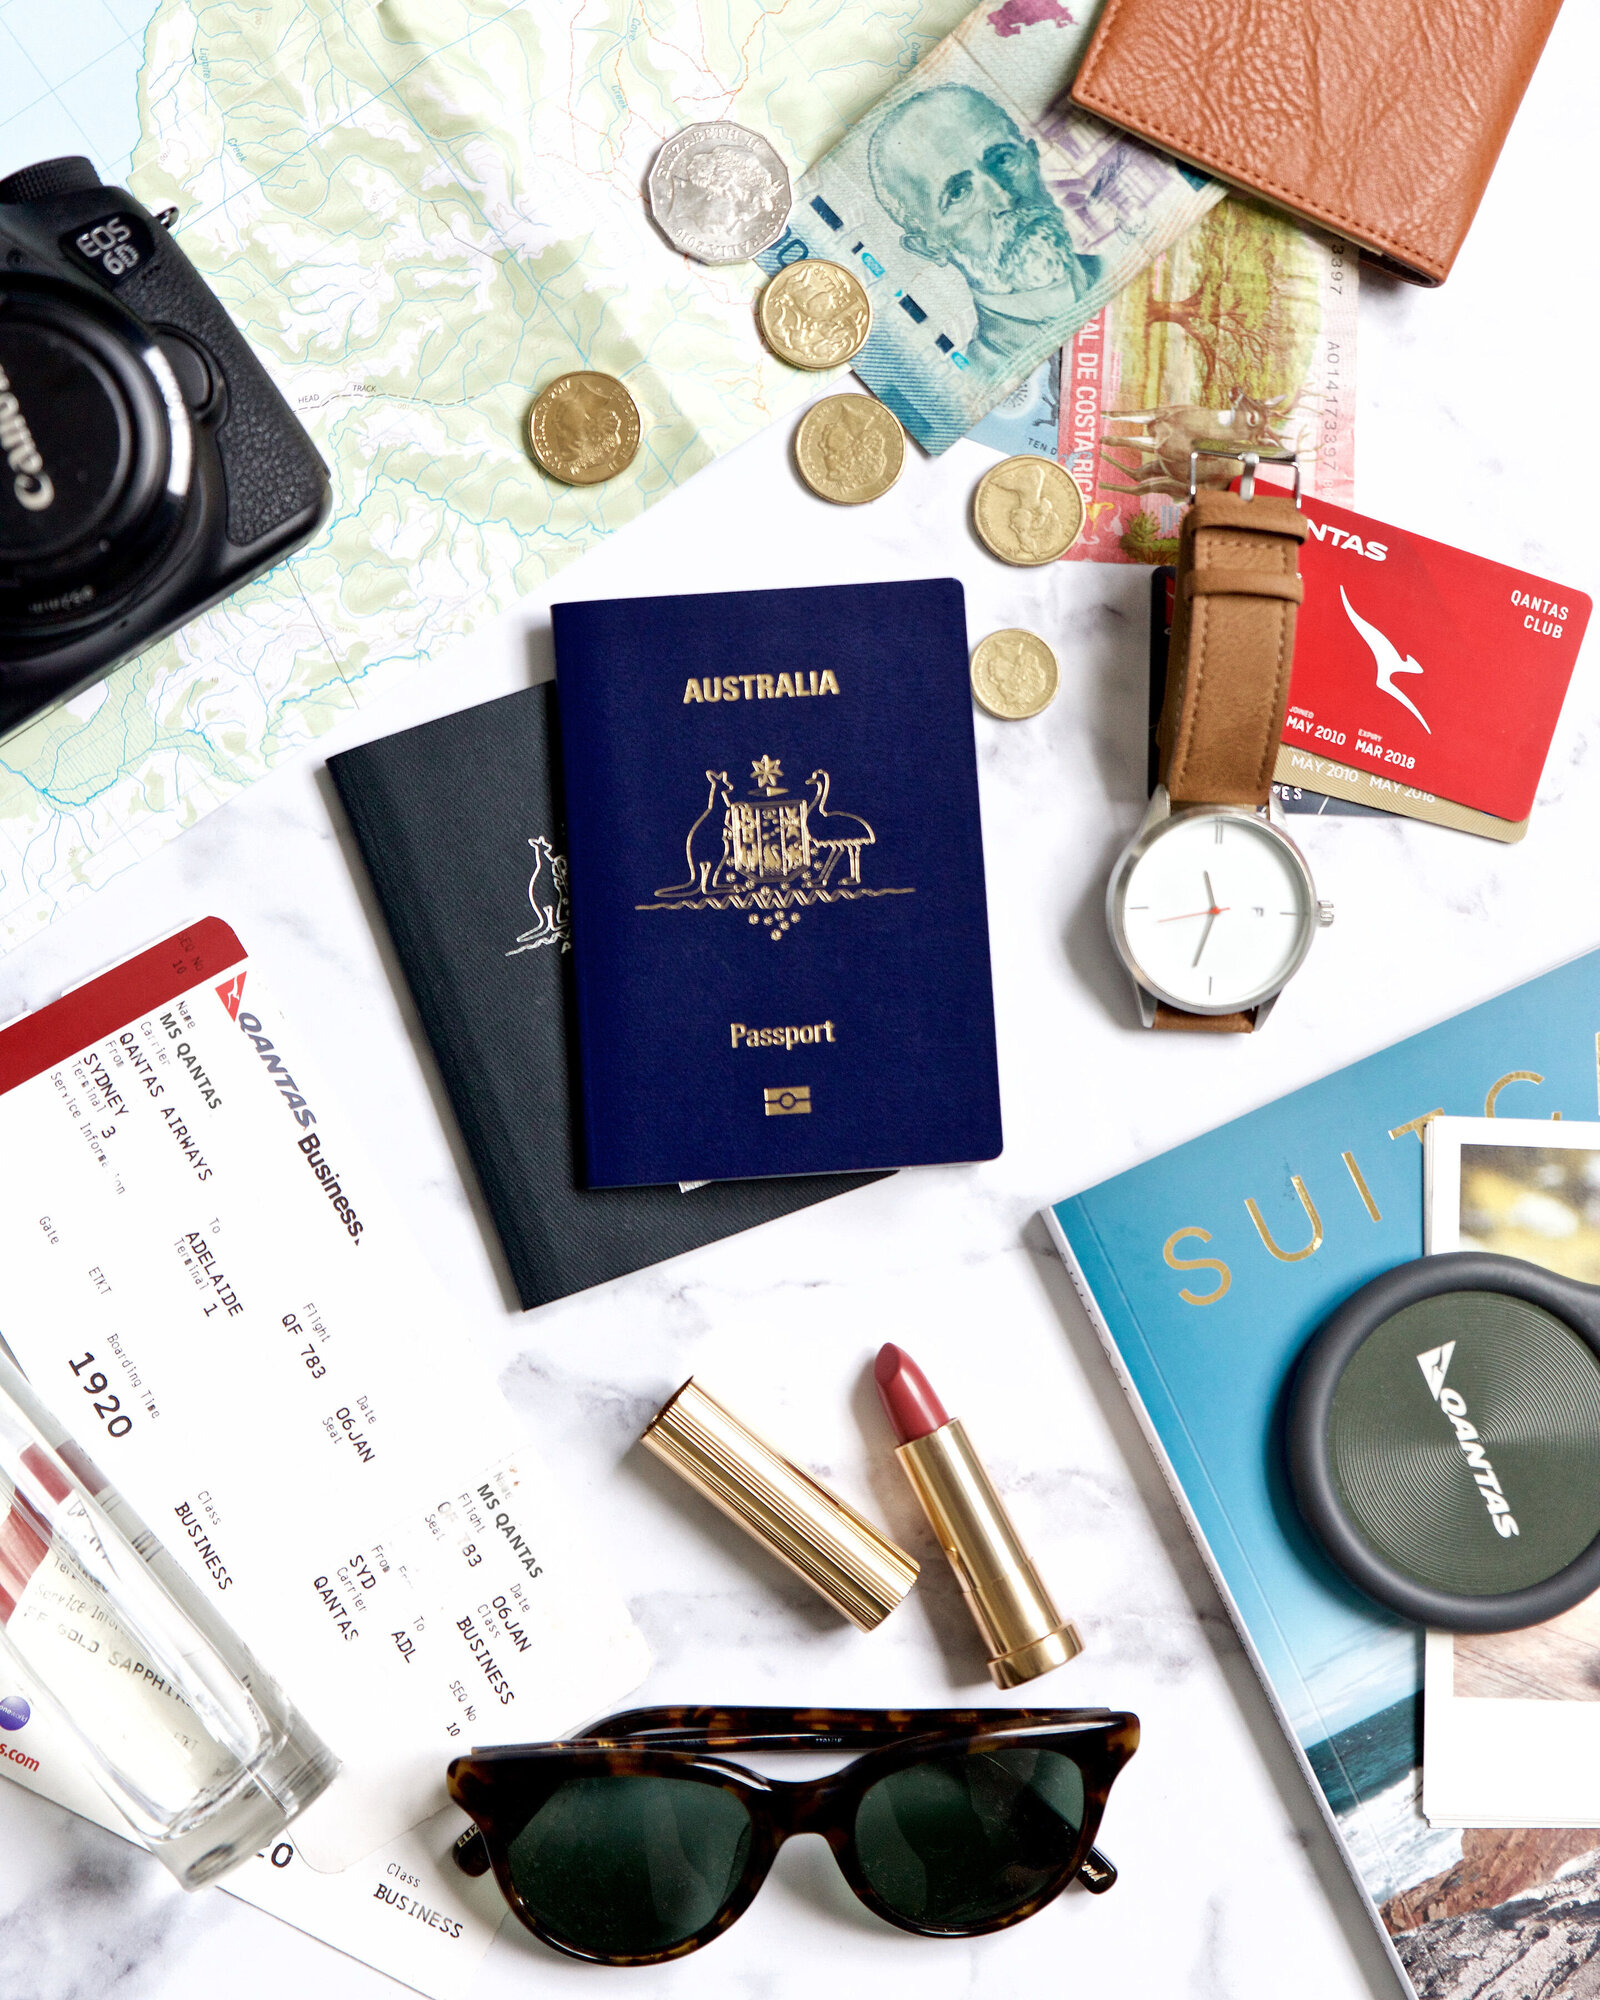 Branding travel photographer Chelsea Loren styled travel flat lay for Qantas Australia with passports, coins, plane tickets, watch, camera, sunglasses